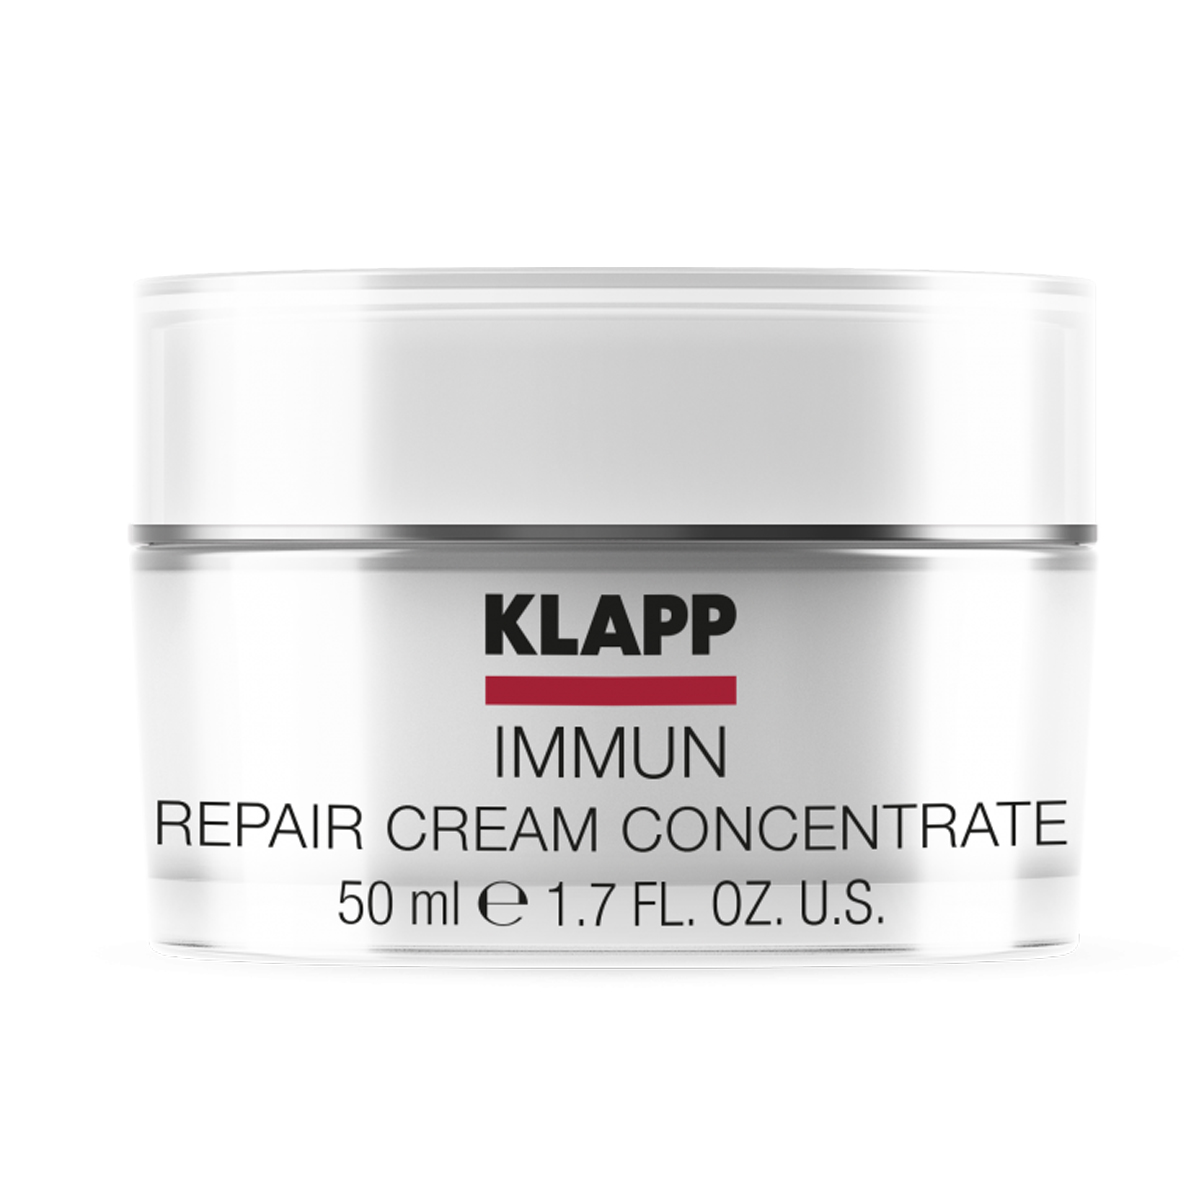 KLAPP Immun Repair Cream Concentrate 50 ml